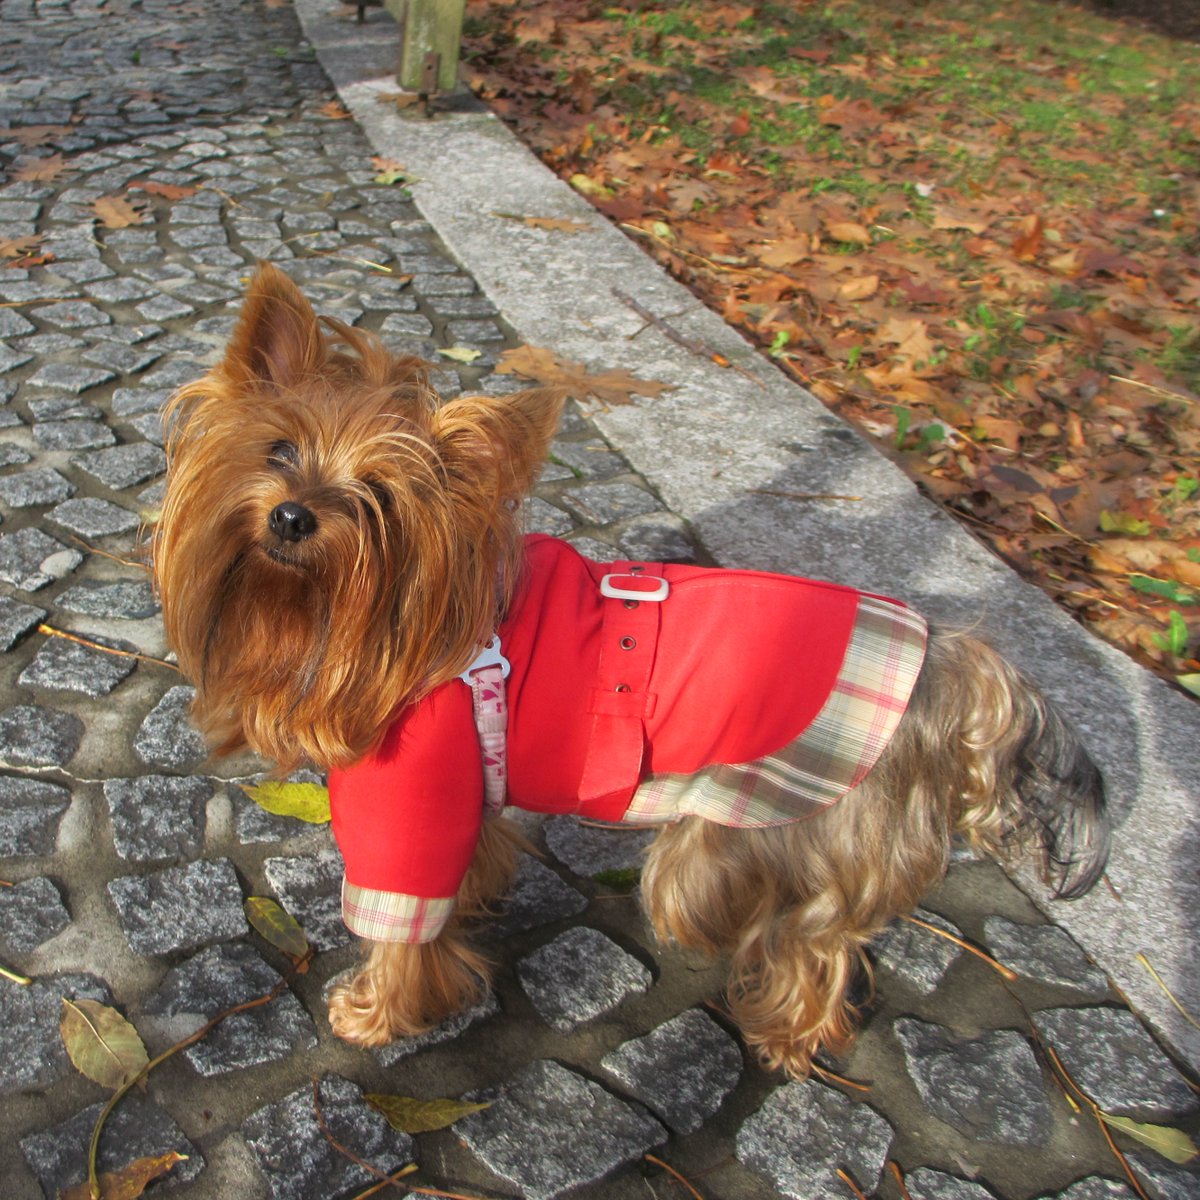 Nira #yorkshire #yorkshireterrier #yorkies #yorkielife #yorkielovers #yorkielover #yorkshire_terrier #dog #犬 #hund #chien #perro #cachorro #cane #citydog #yorkielove #yorkie #ヨーキー #york #йорк #yorkshire #собака #йоркширскийтерьер #terriers #doglovers #dogclothes #dogclothing